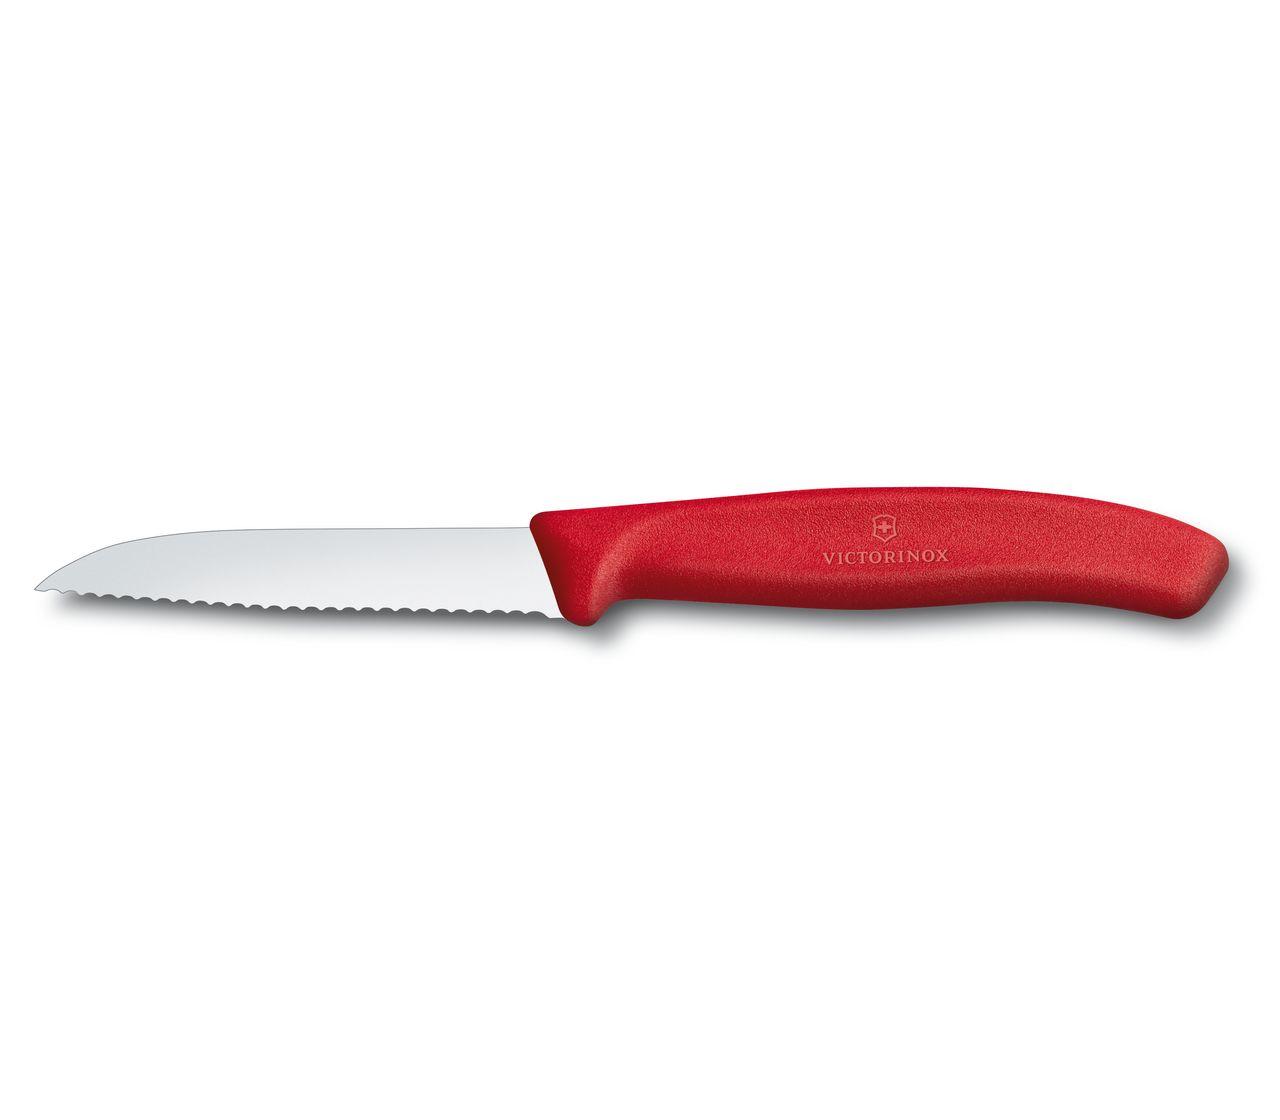 Victorinox paring knife 6.7730